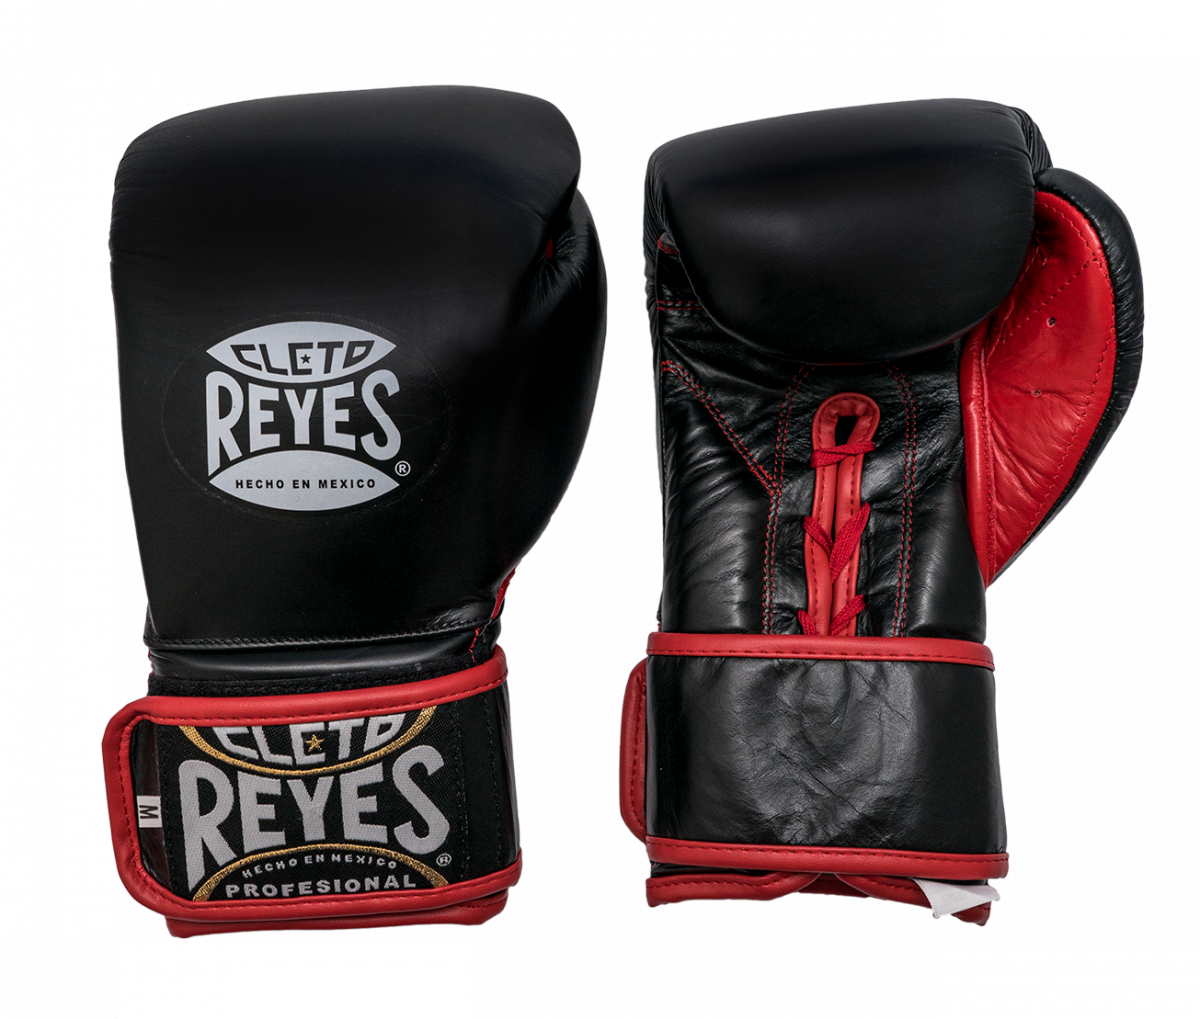 betaling Permanent Array af Cleto Reyes Universal Training Boxing Gloves